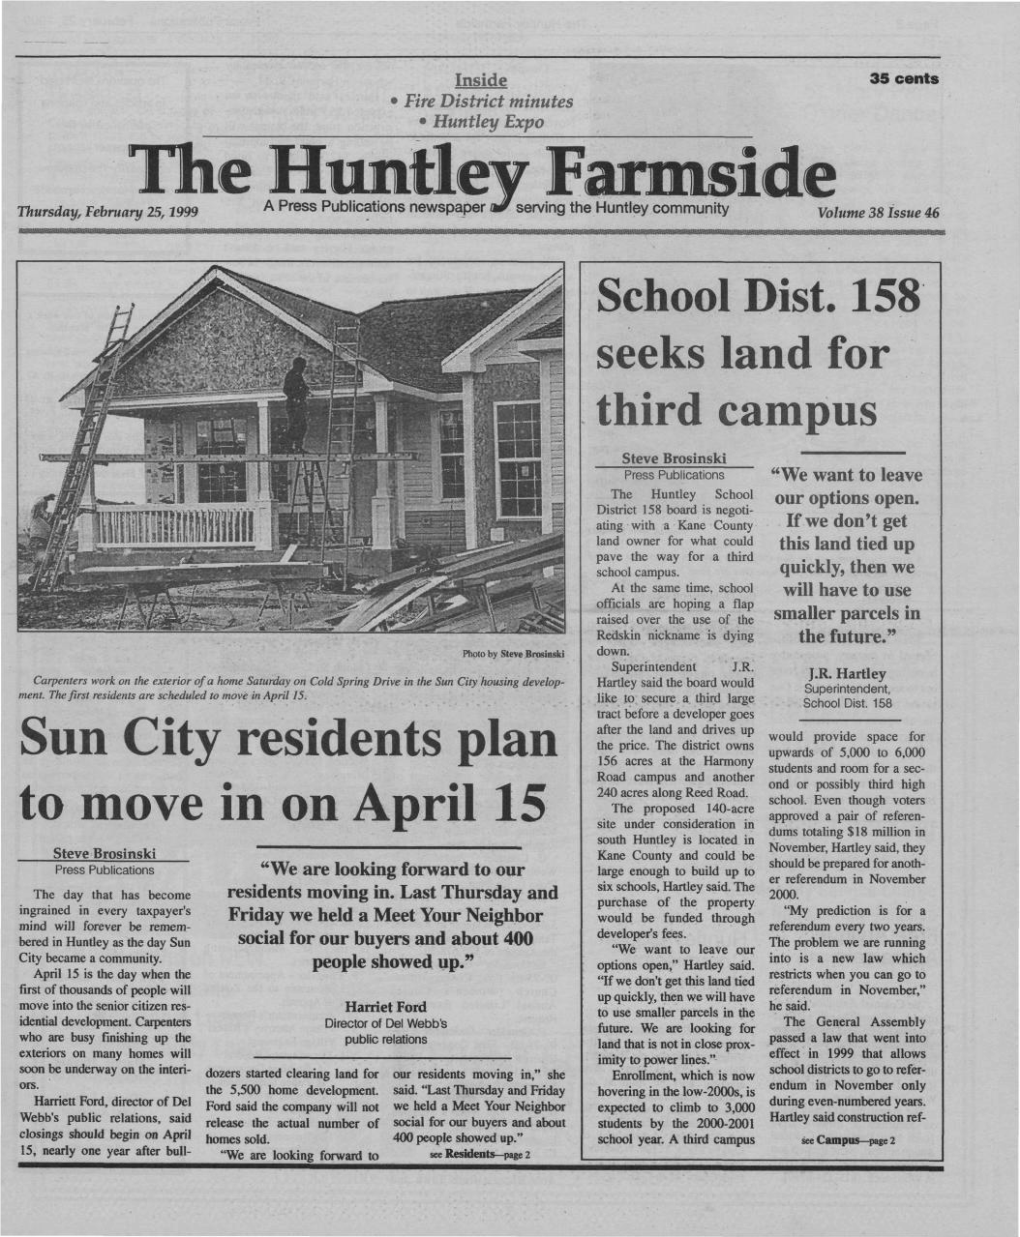 The Hinitley Farmside Thursday, February,« , On25,1999 Tooo a Press Publications Newspaper «R Serving the Huntlev Communitv Volumev^I 38 Issue 46 School Dist